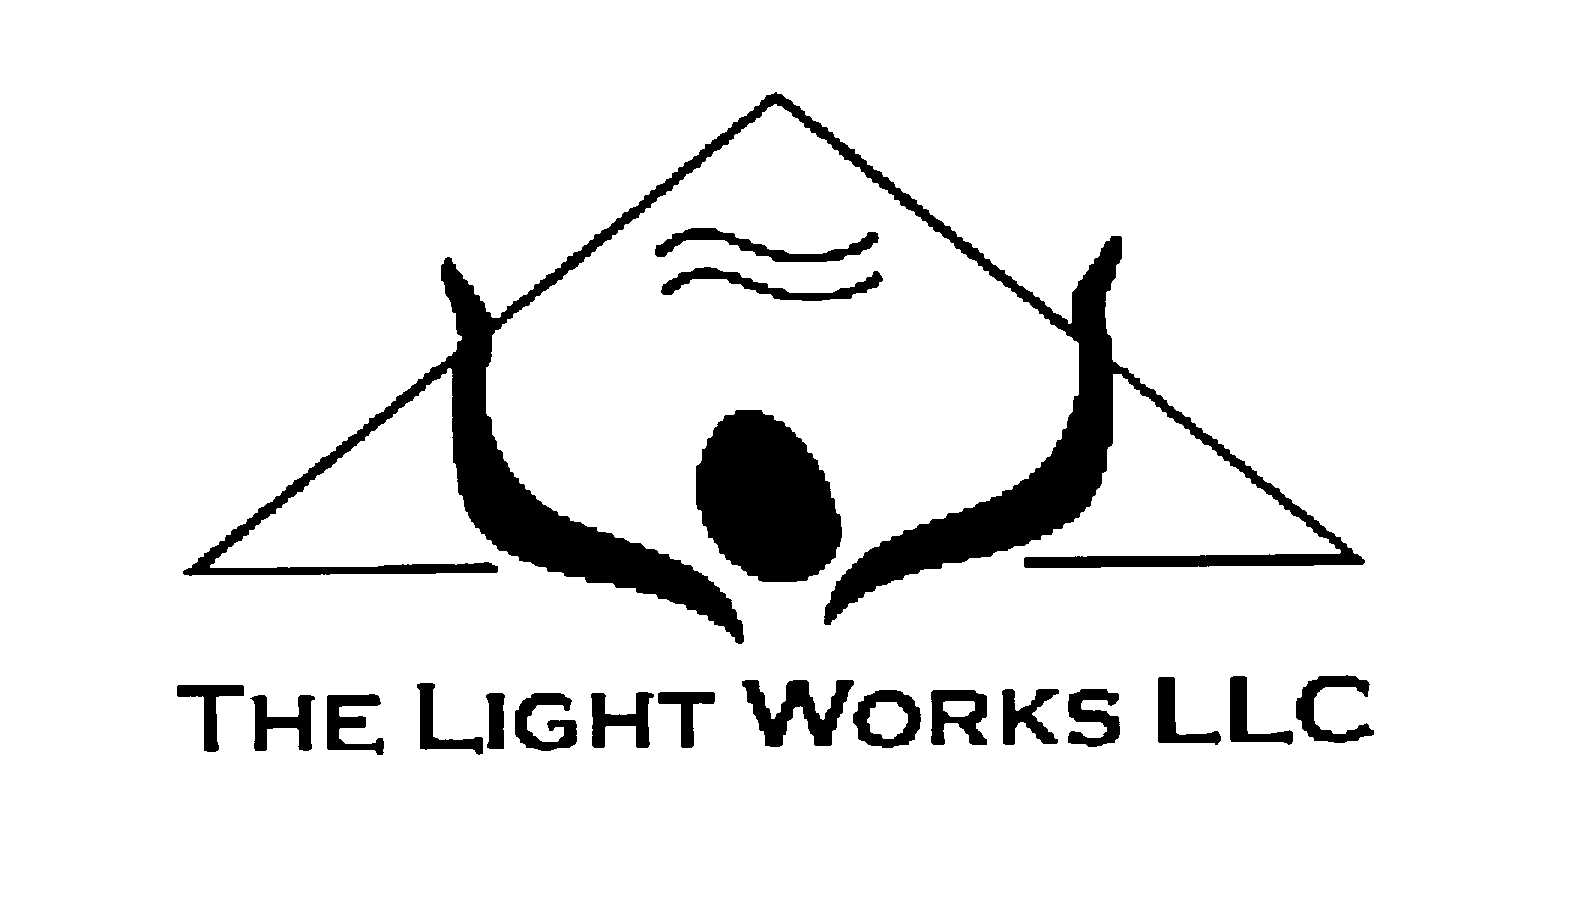  THE LIGHT WORKS LLC